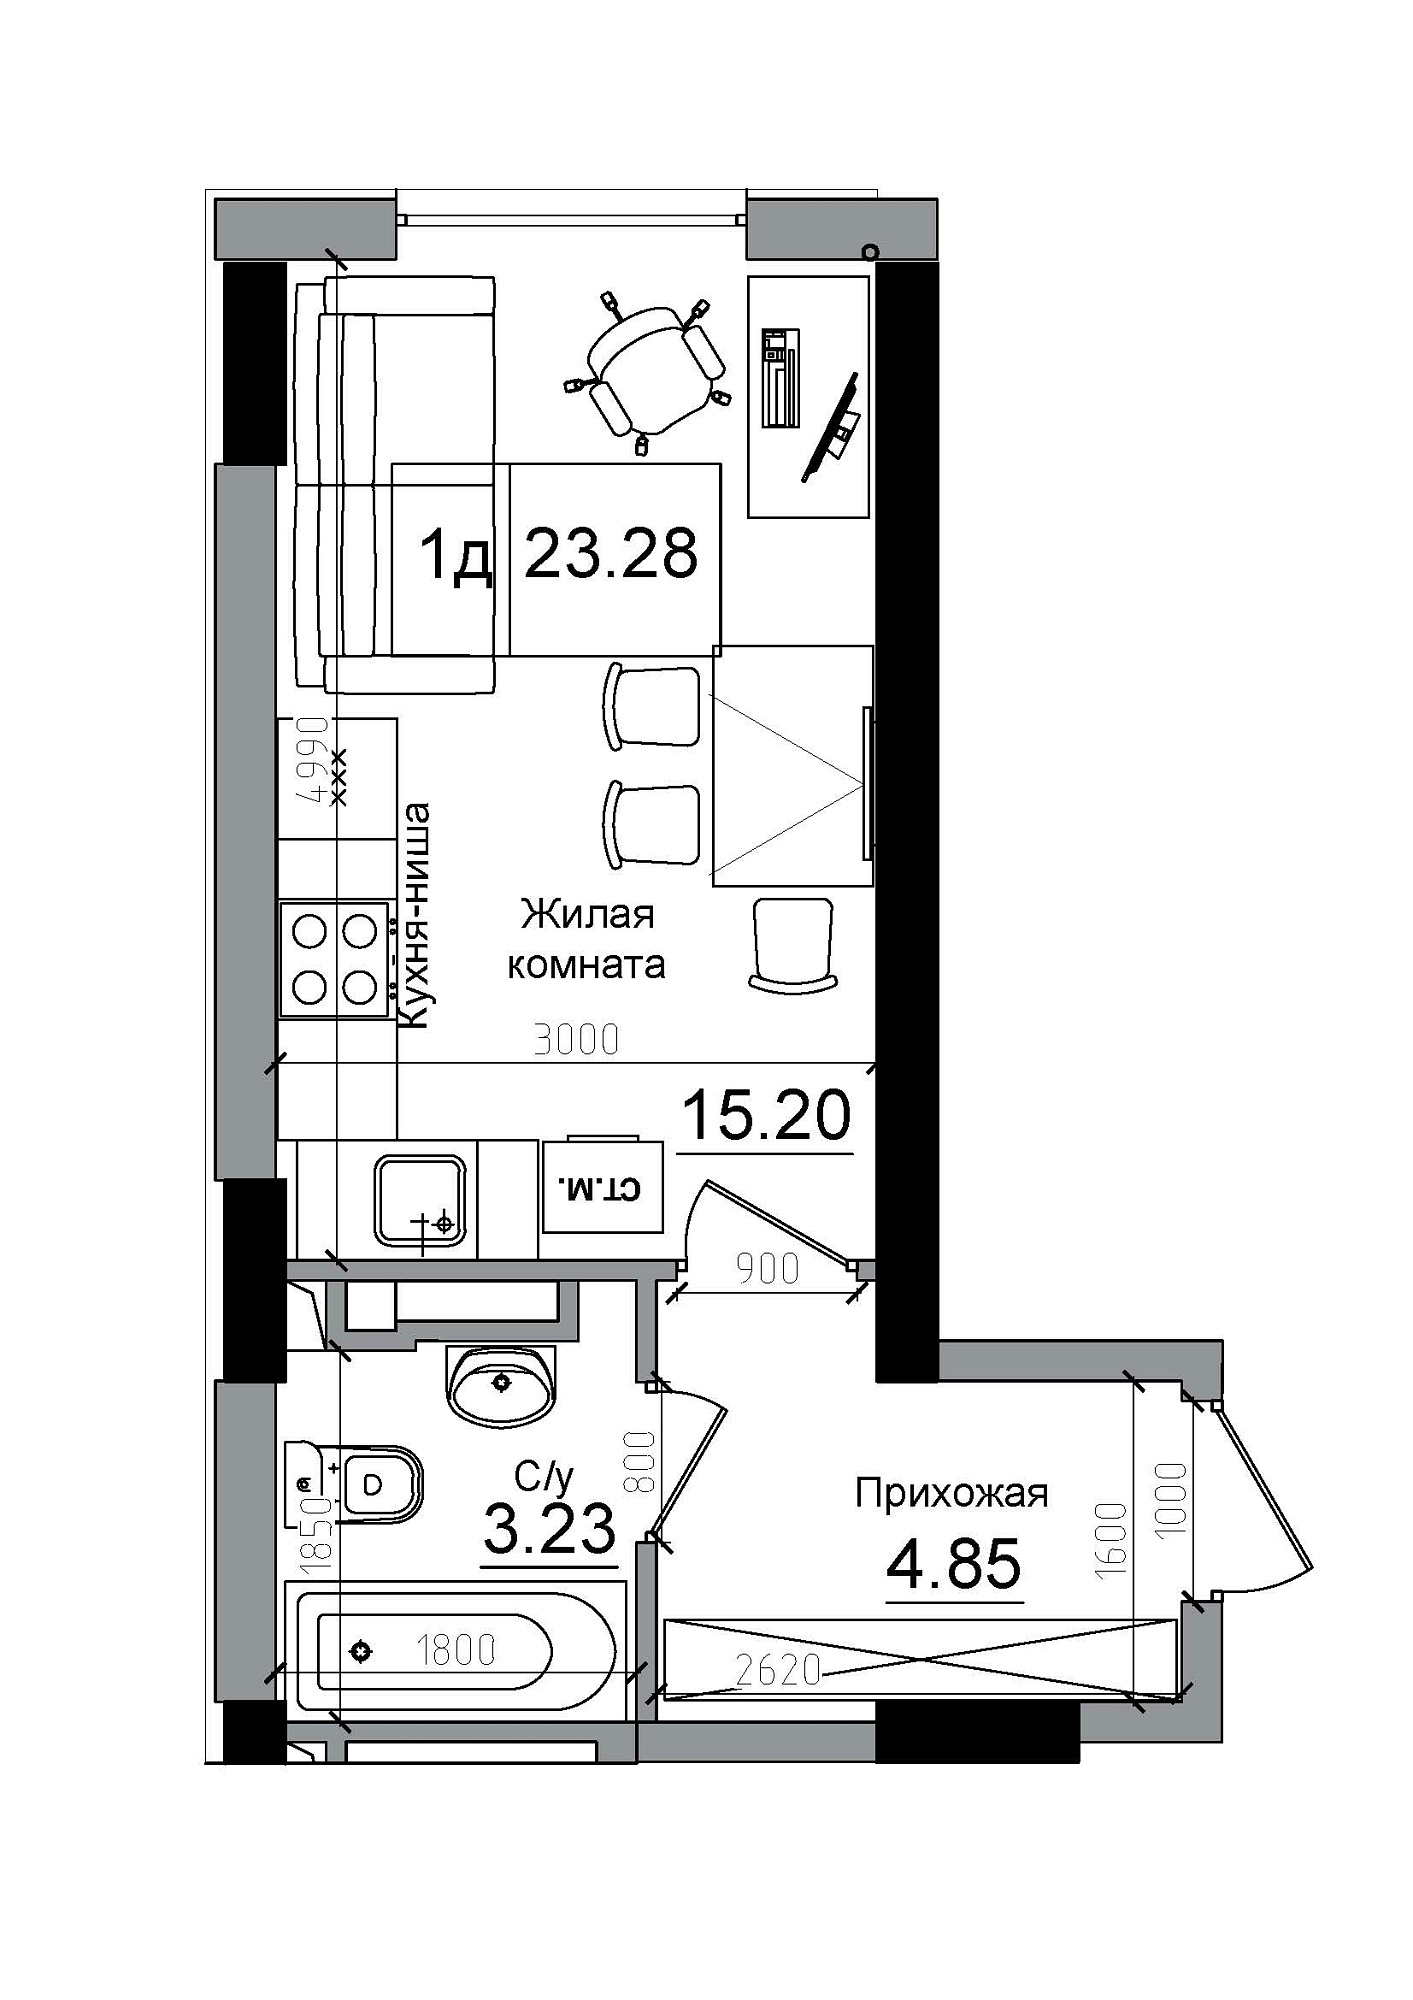 Planning Smart flats area 23.28m2, AB-12-08/00005.